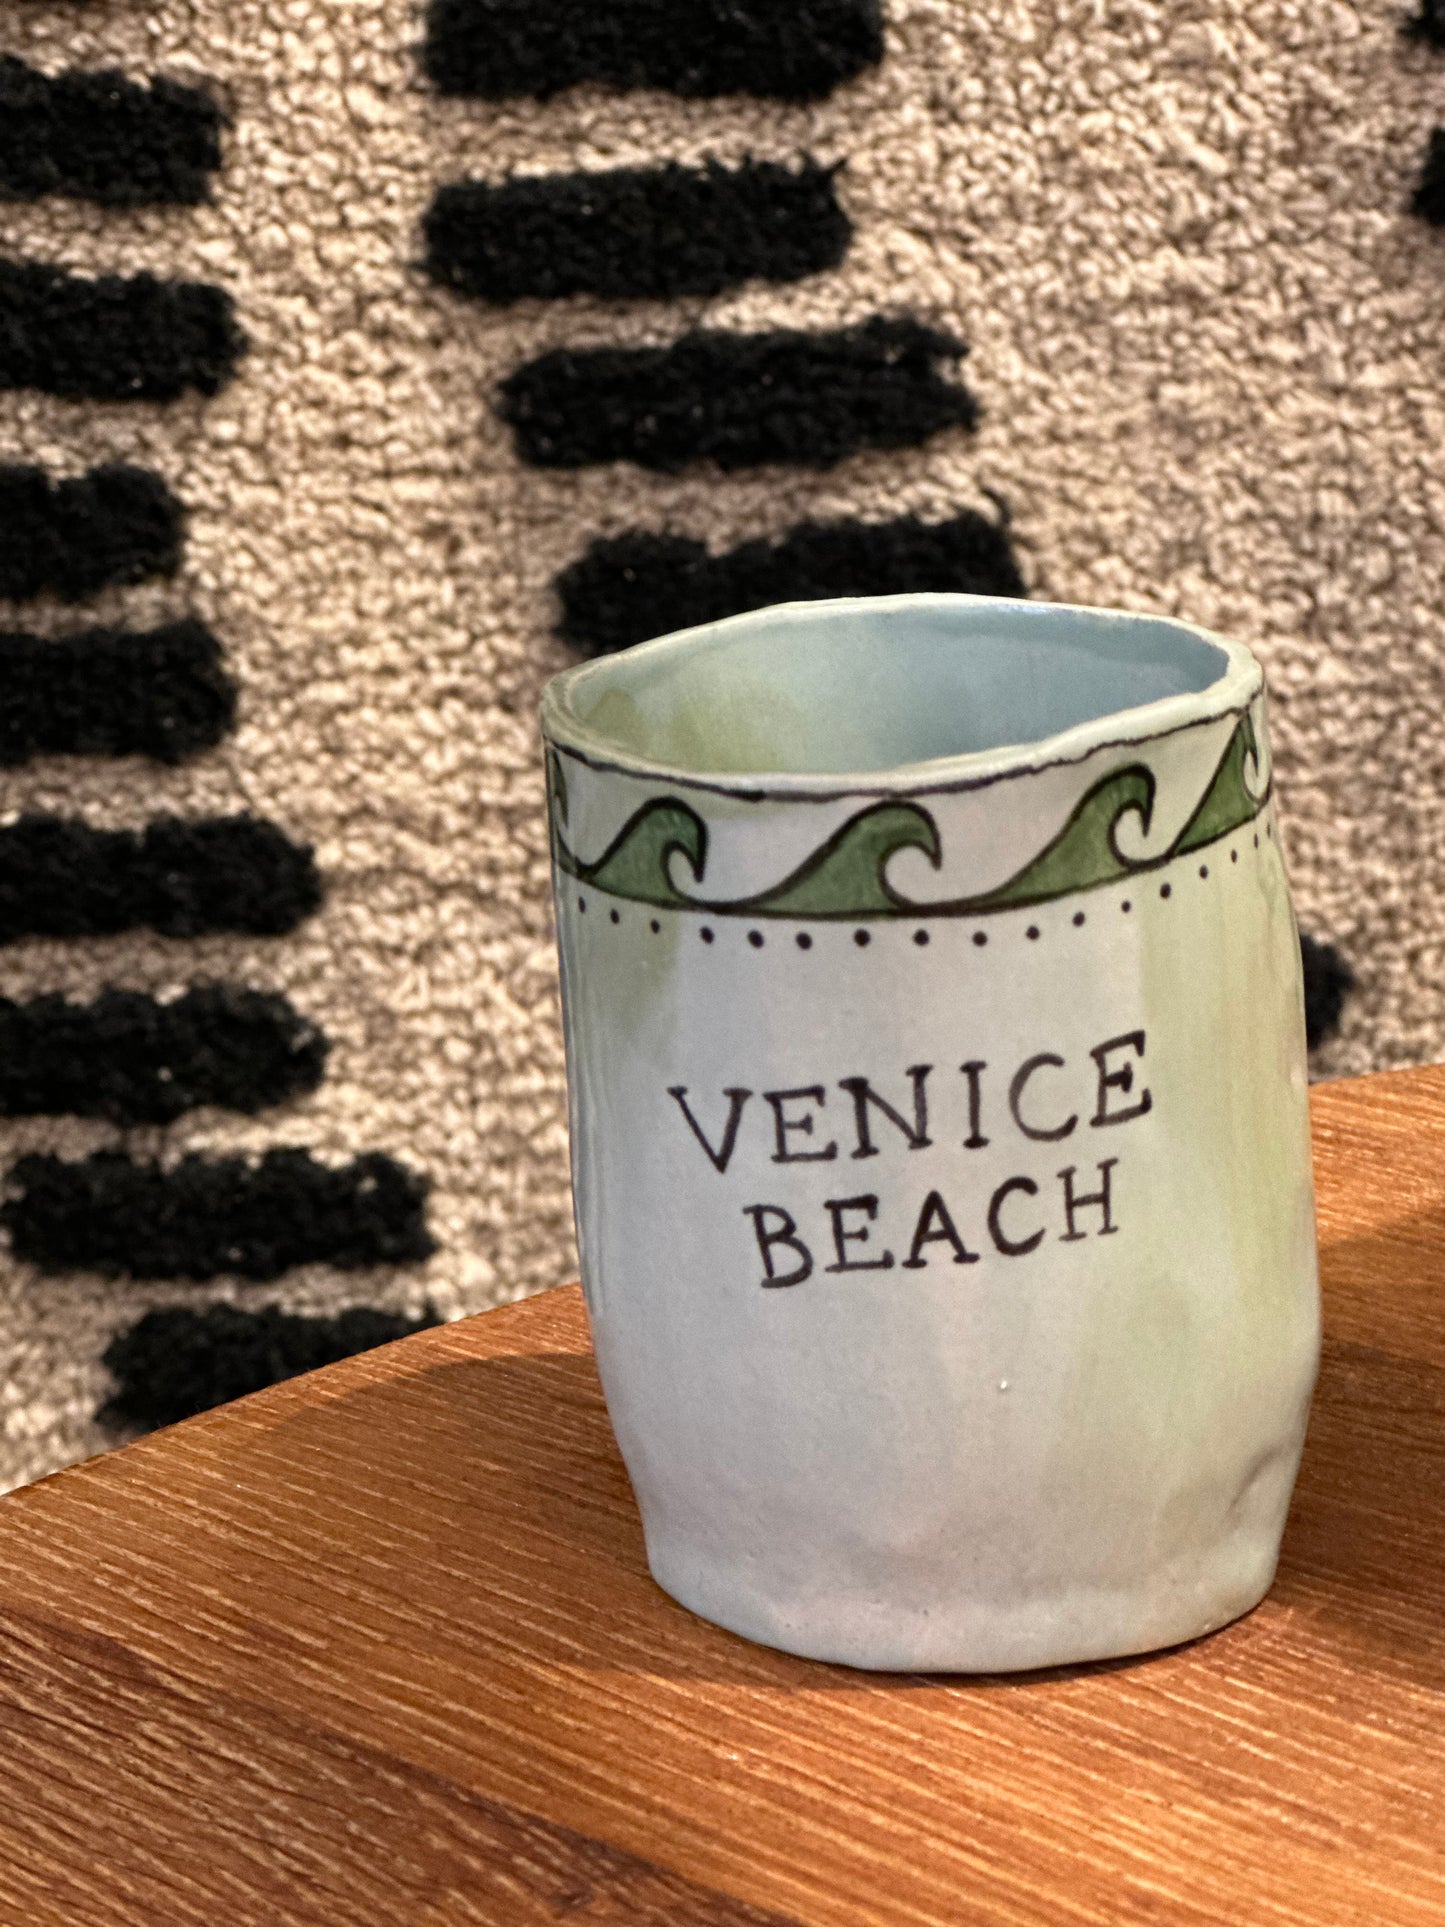 Venice beach brush pot